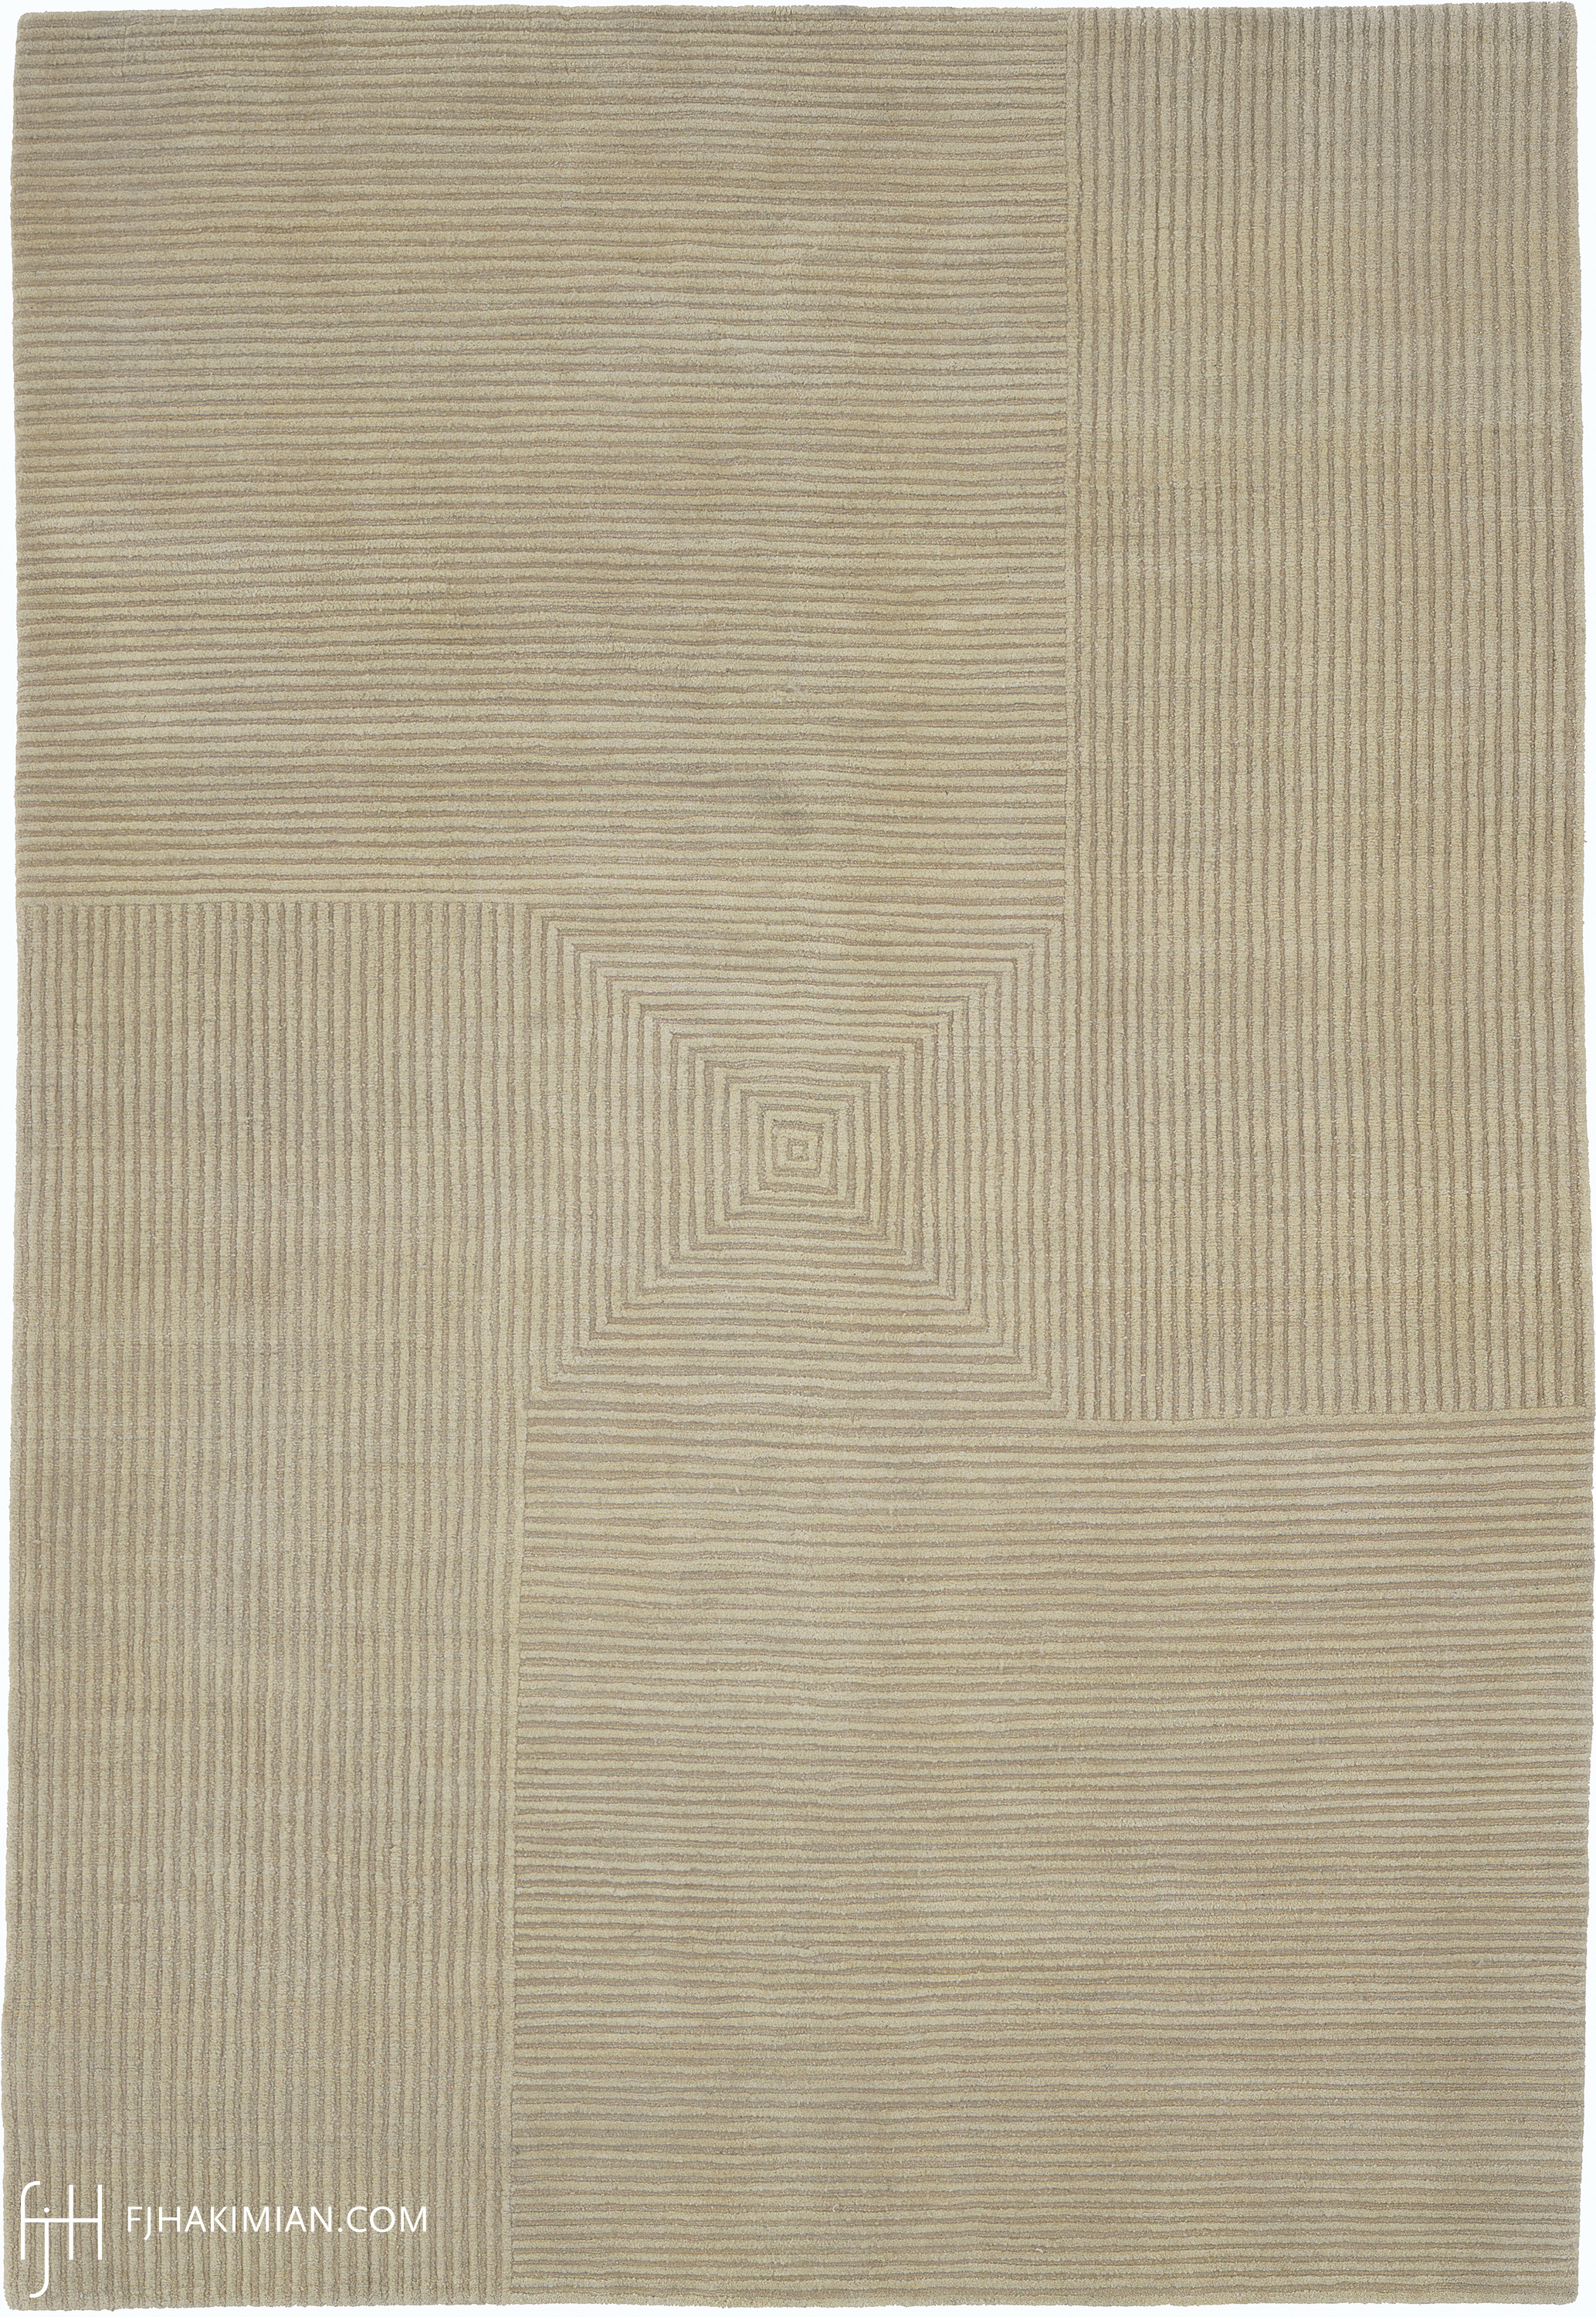 Vario Design | Custom Modern Carpets | FJ Hakimian | Carpet Gallery in NY